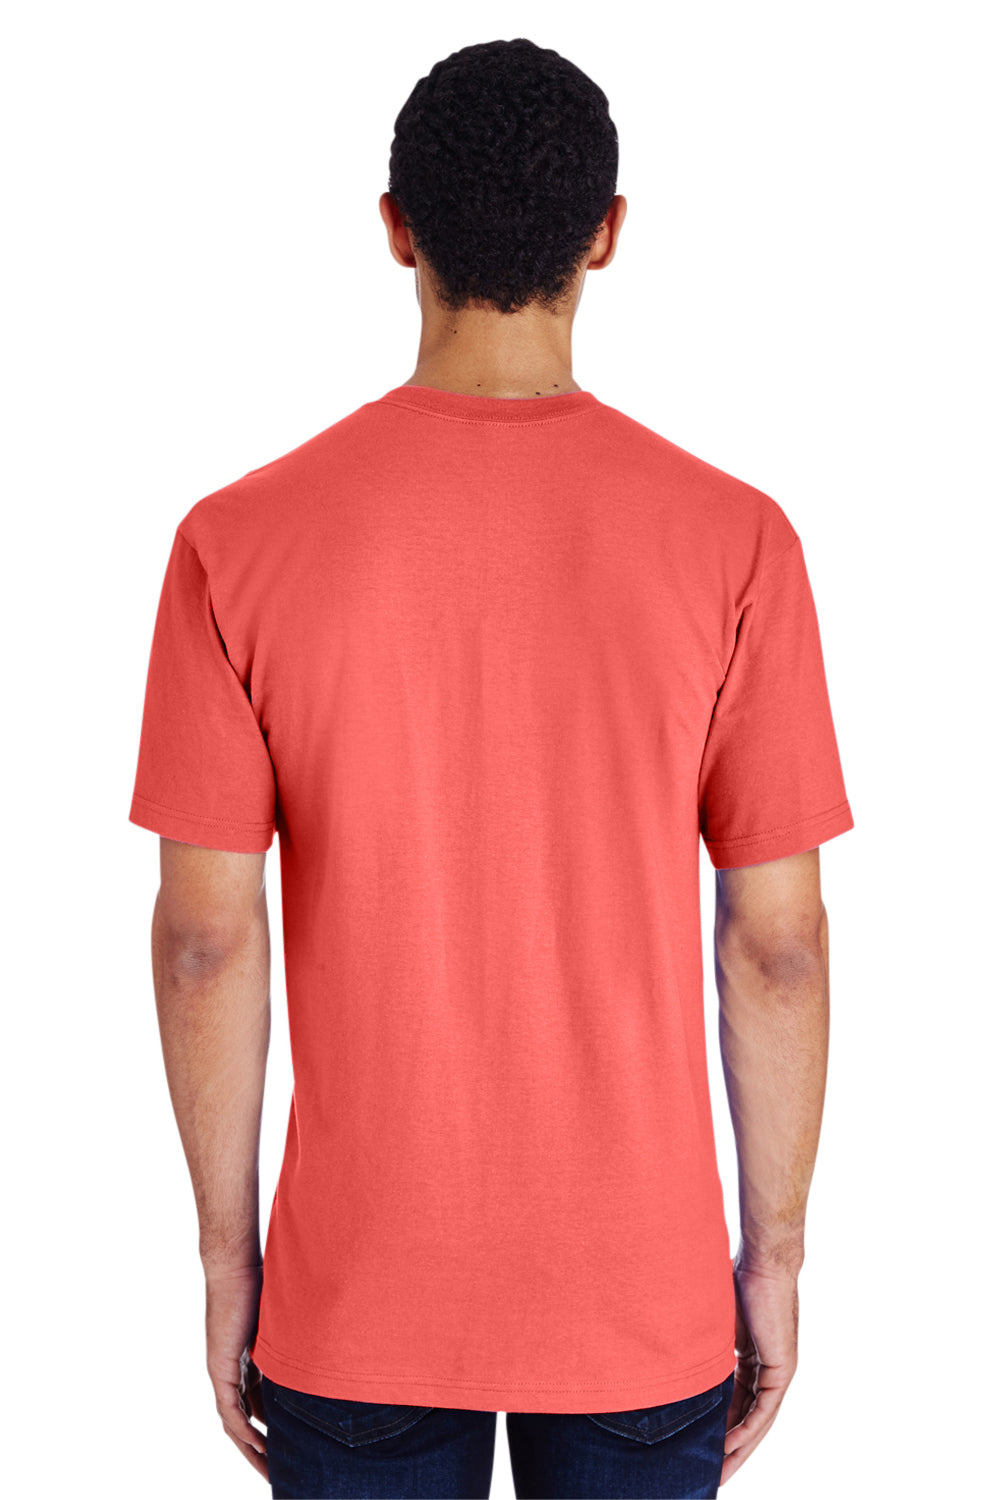 Gildan H000 Mens Hammer Short Sleeve Crewneck T-Shirt Bright Salmon Red Back